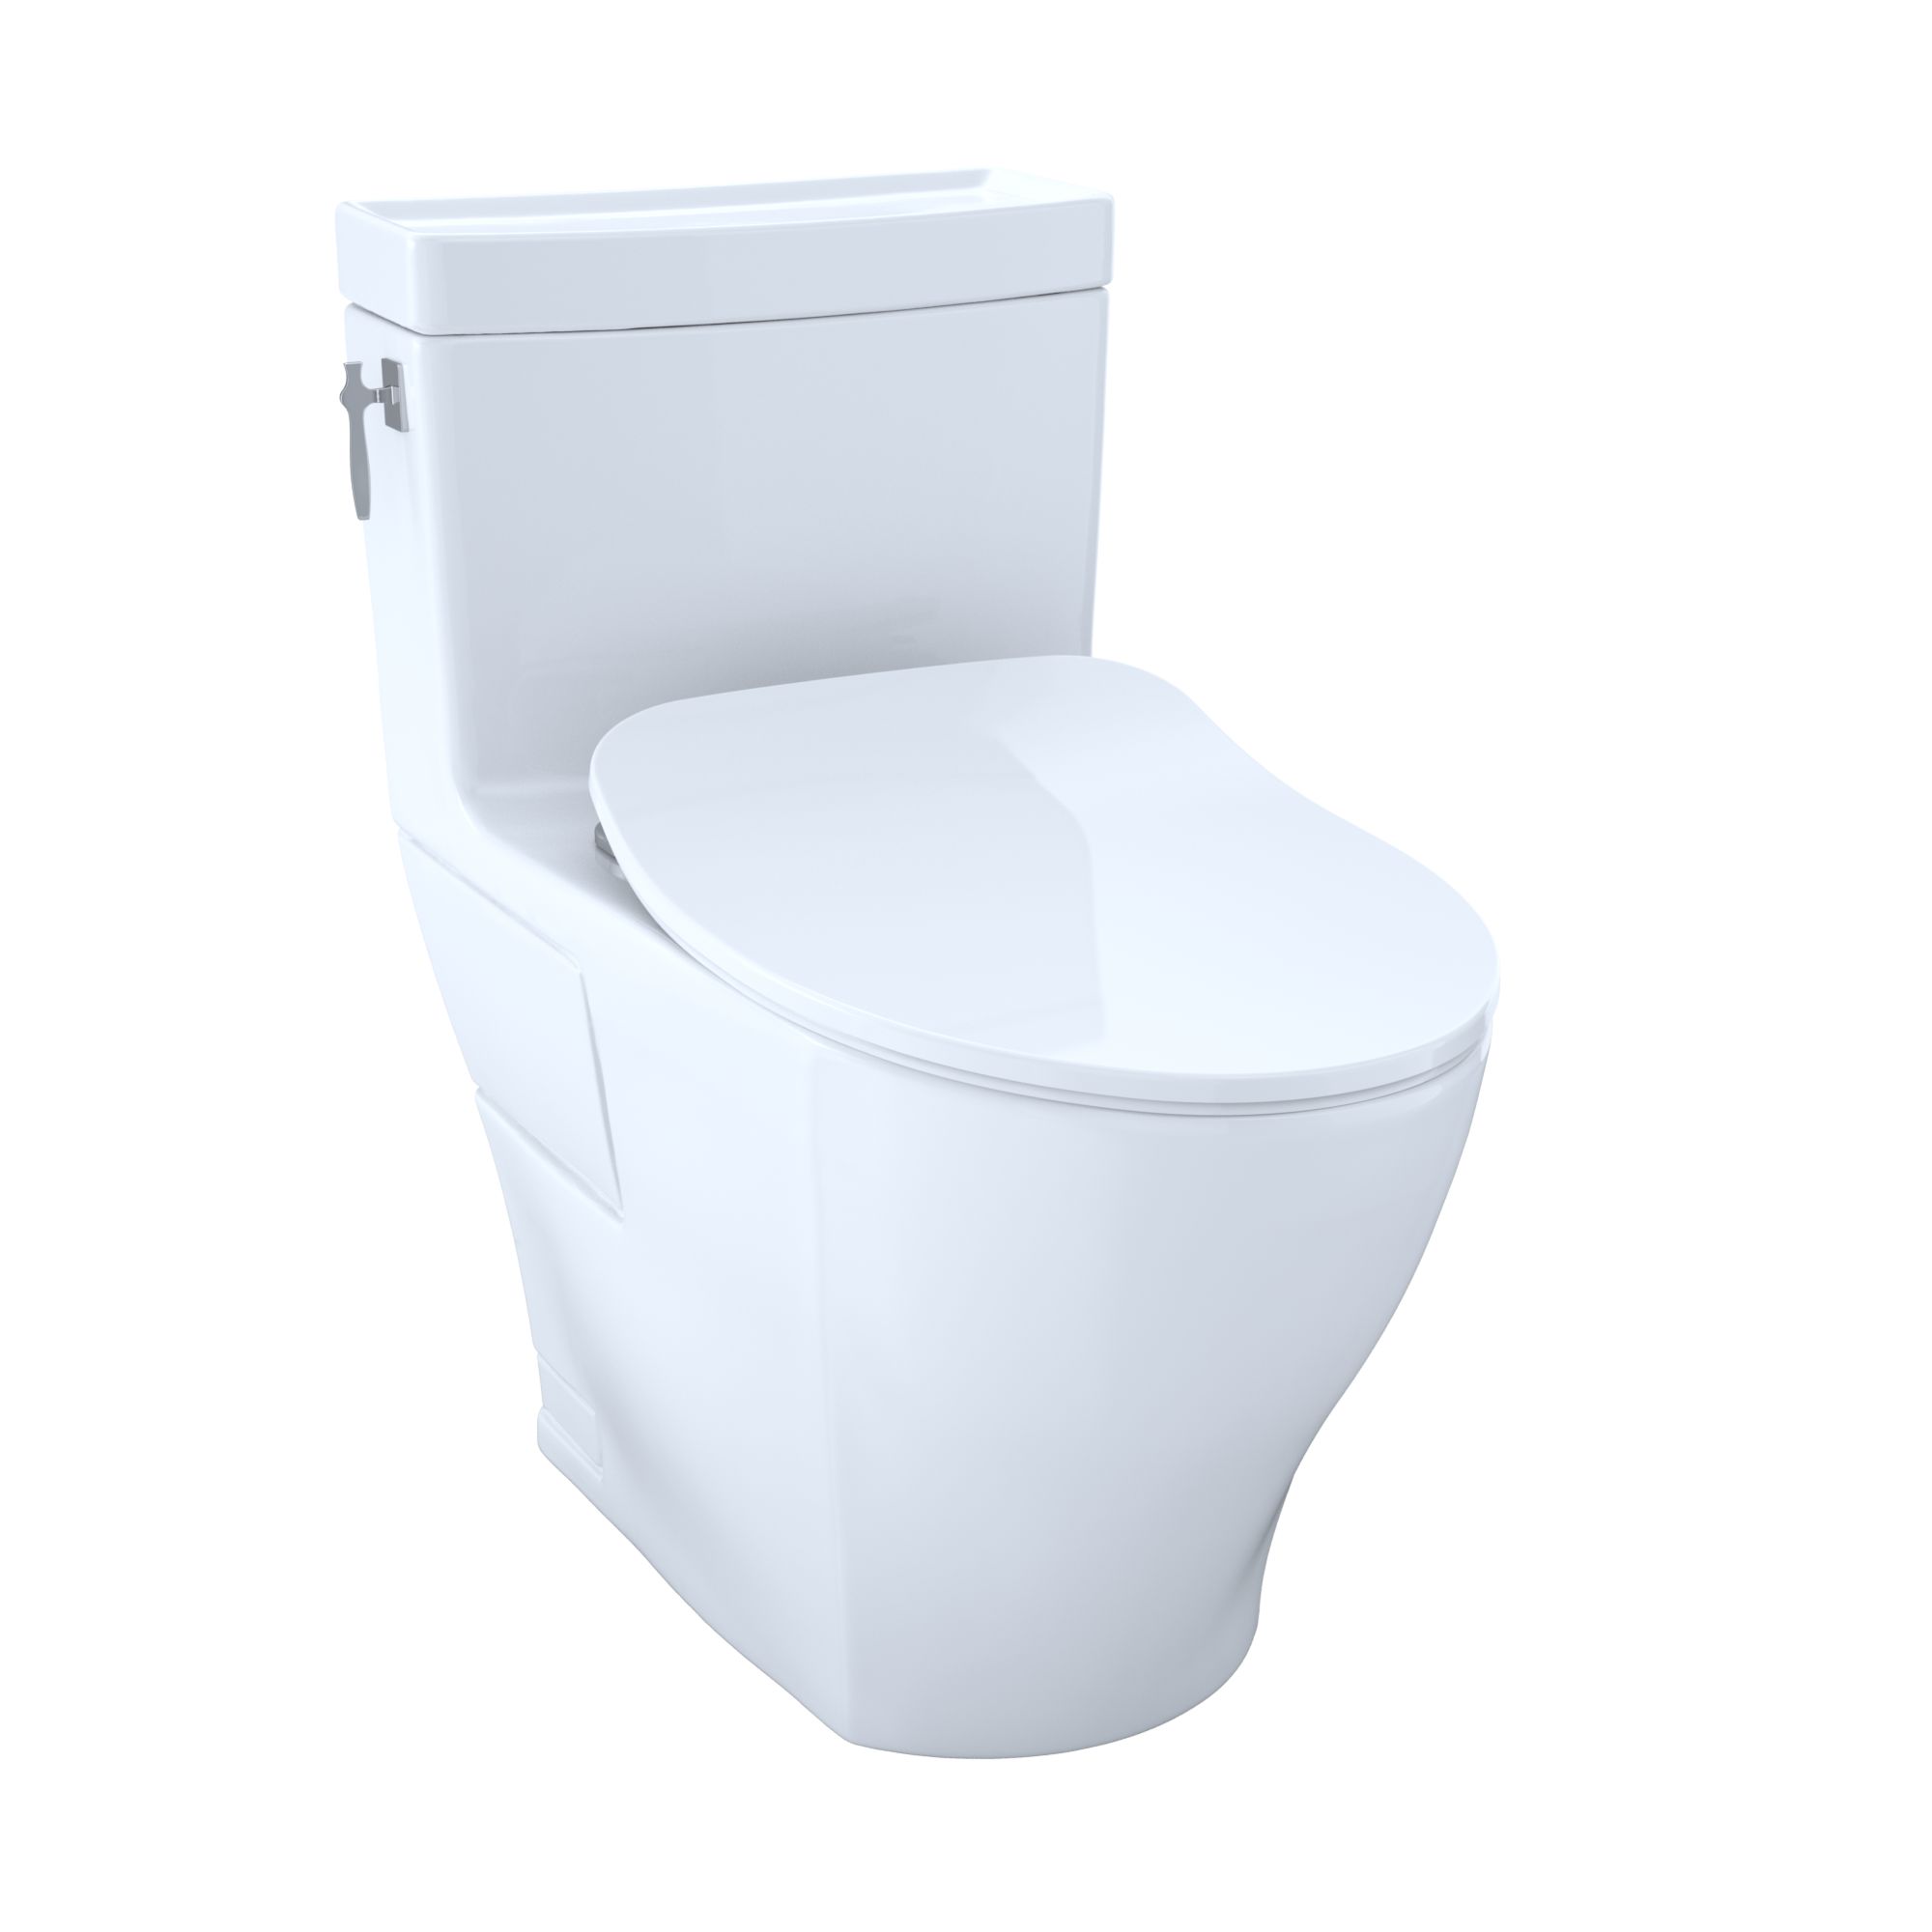 Aimes® One-Piece Toilet, 1.28GPF, Elongated Bowl - WASHLET®+ Connection - Slim Seat